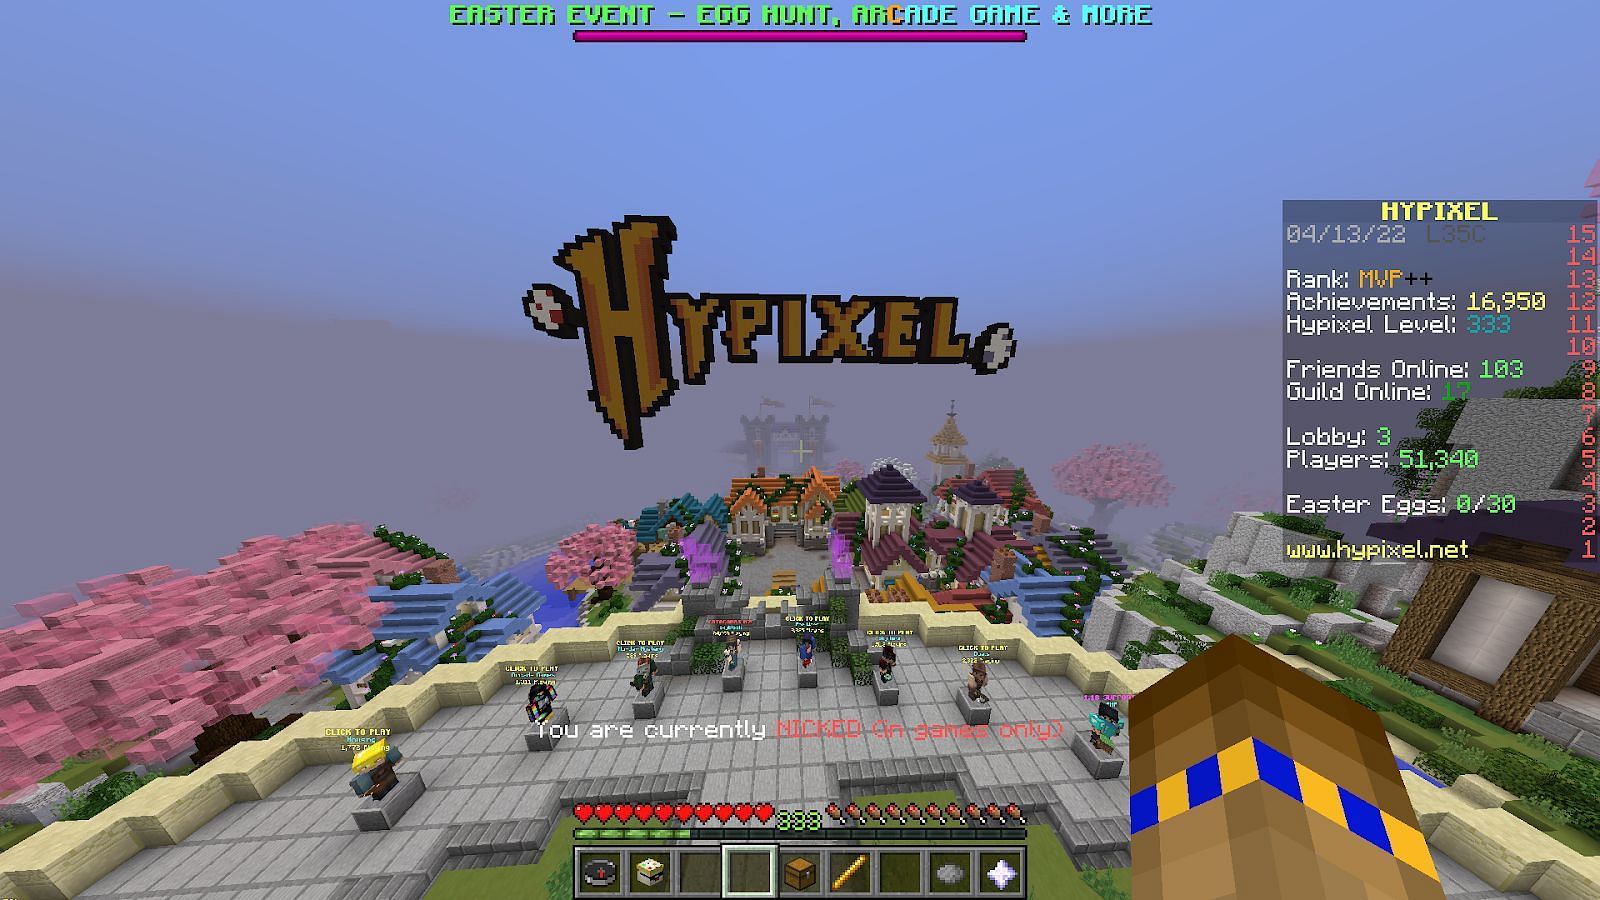 Hypixel is an excellent server (Image via Hypixel.net)